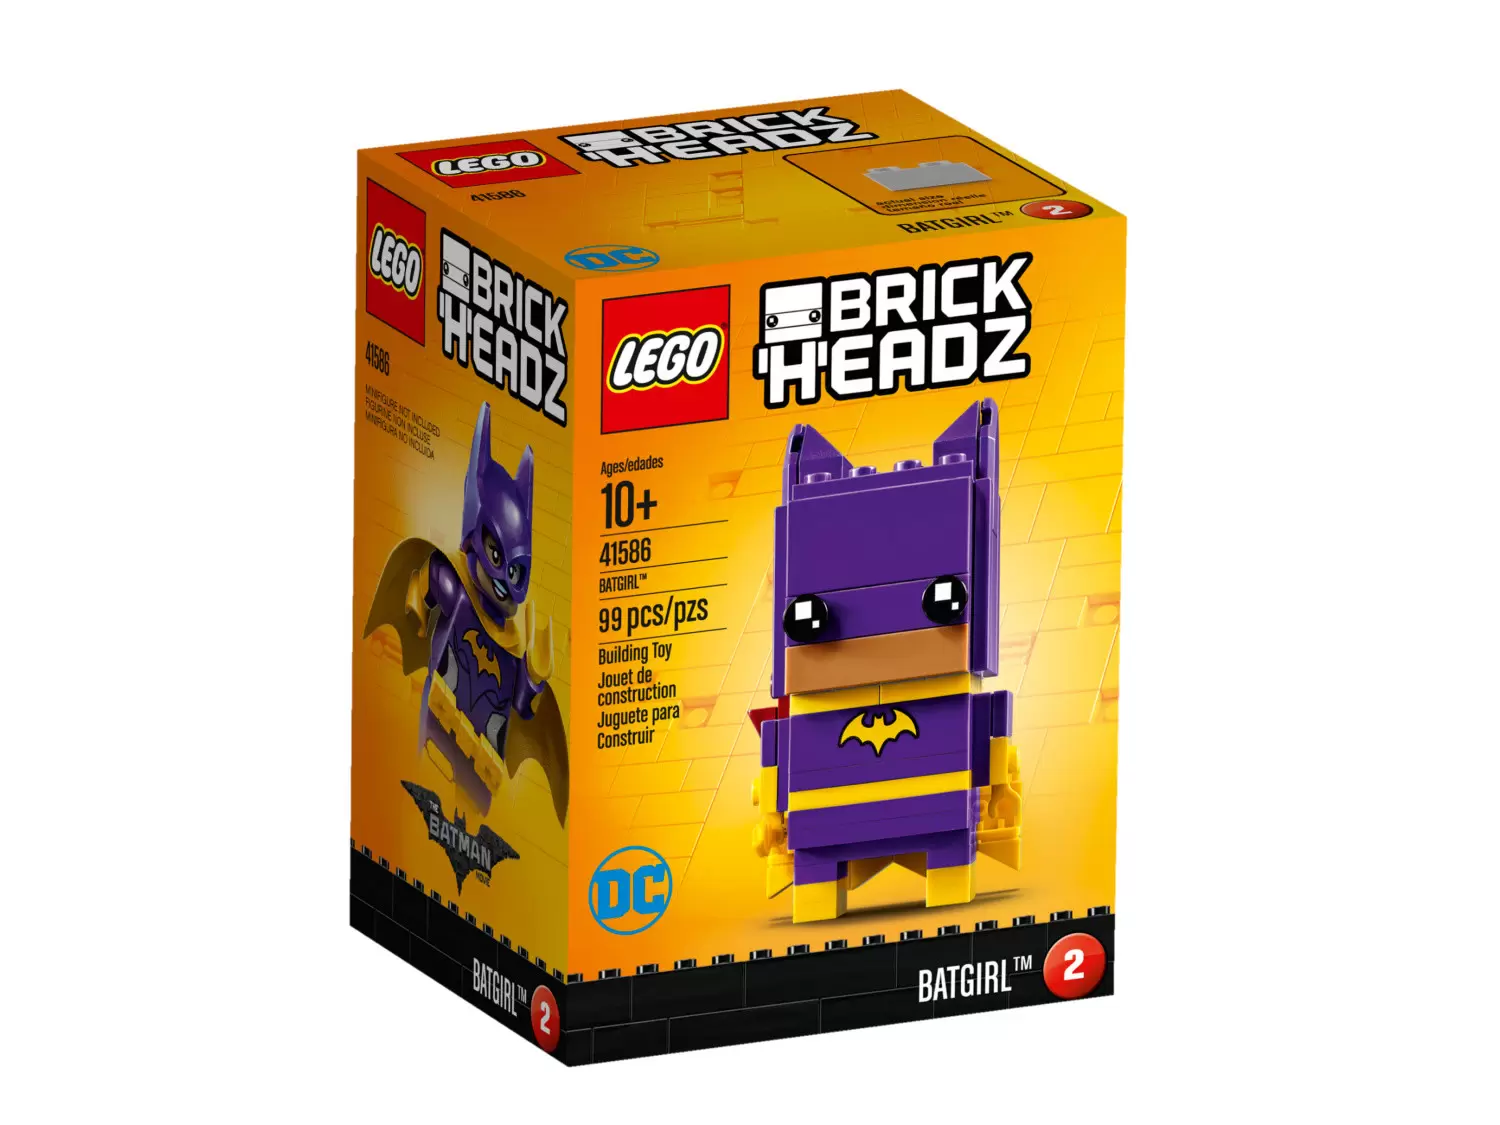 LEGO BrickHeadz - 02 - Batgirl